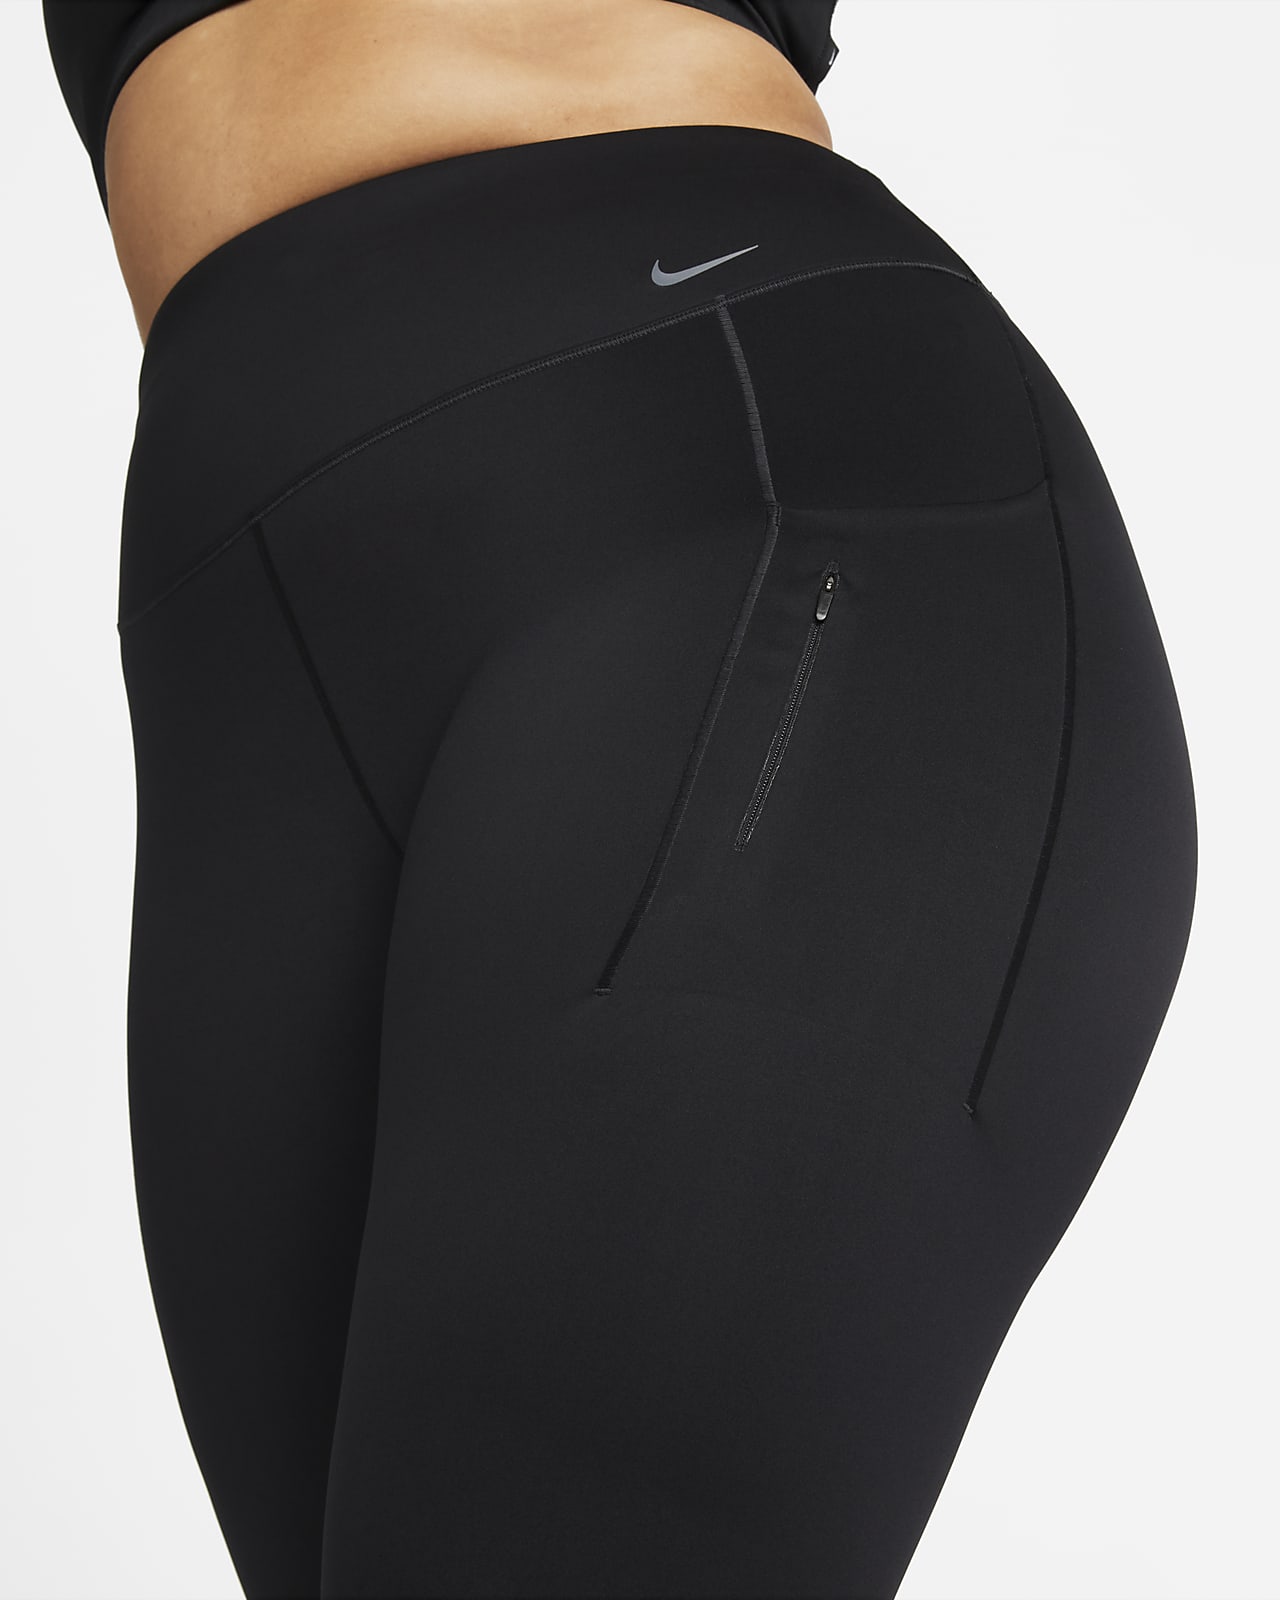 Nike Go Women's Firm-Support Capri Leggings Pockets (Plus Size). Nike.com